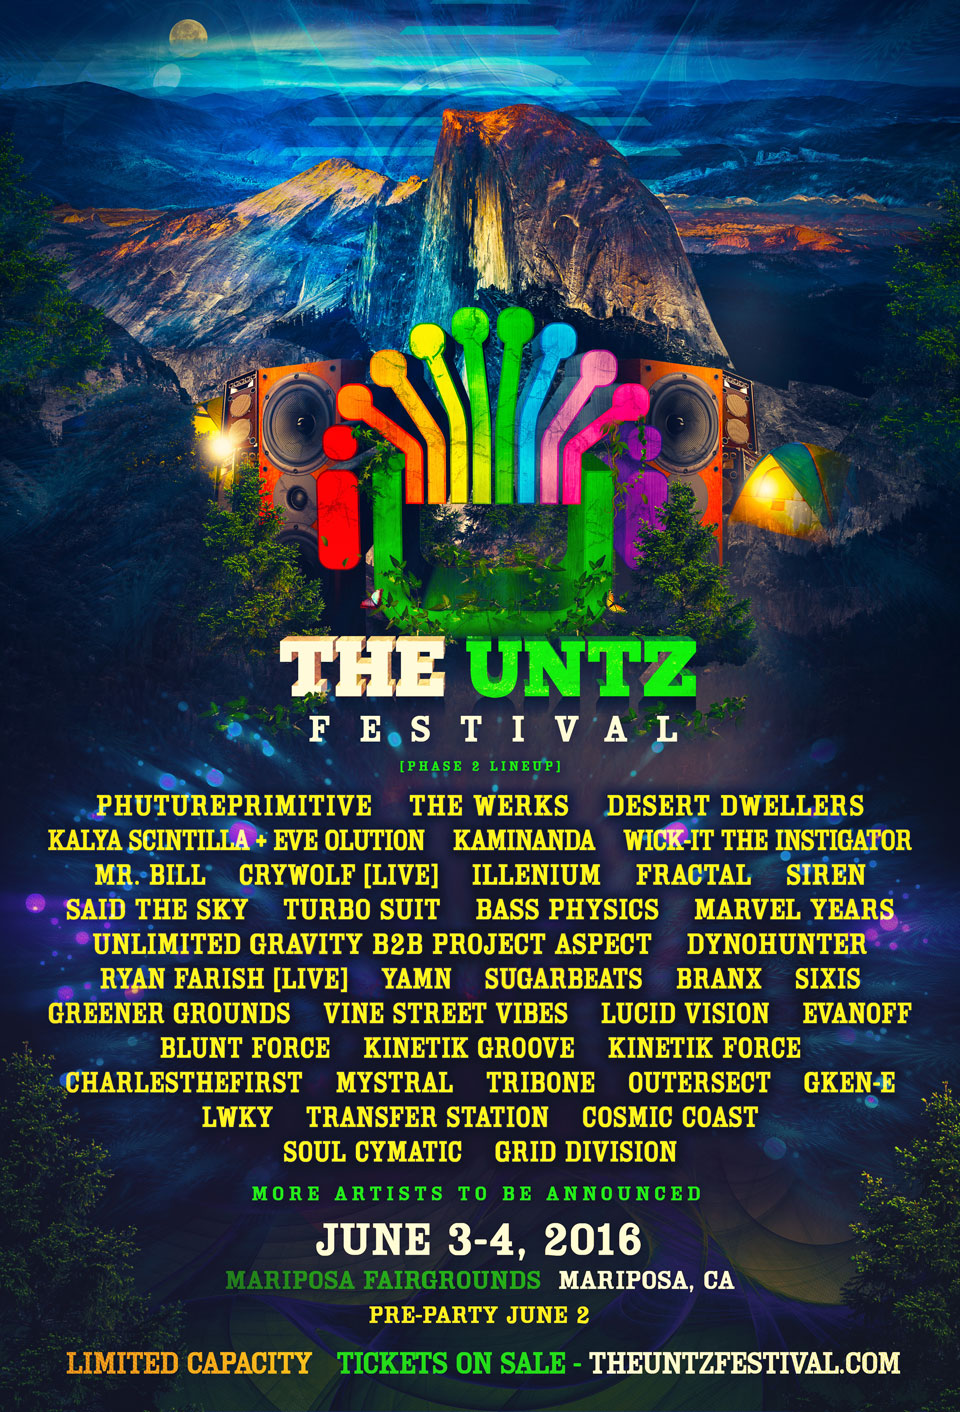 The Untz Festival